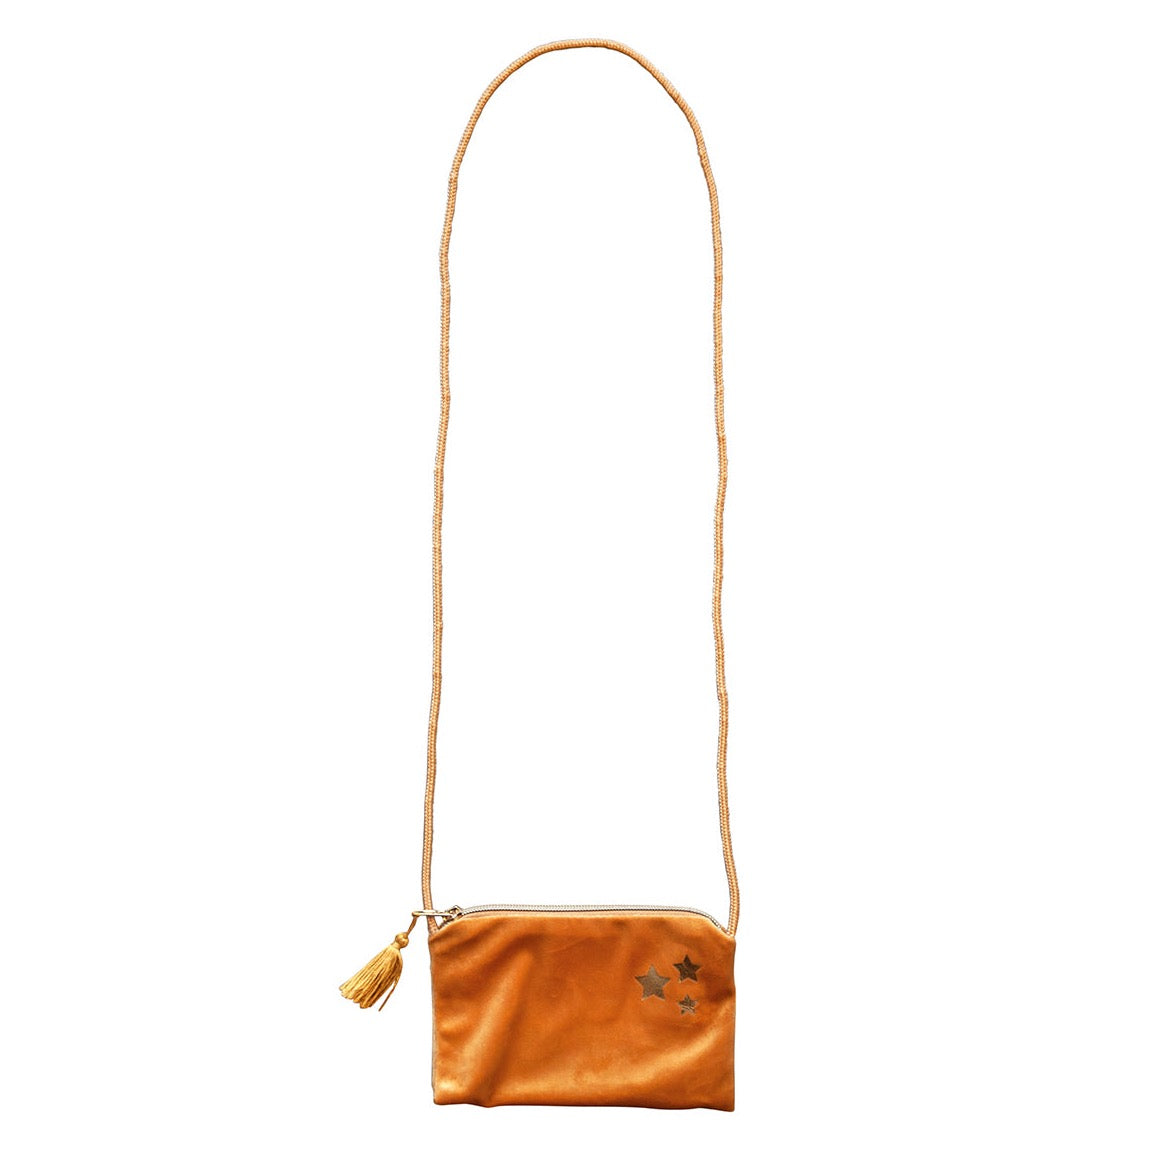 Cut little bag made of soft velvet with a beautiful cotton floral interior, zipper and cute little tass